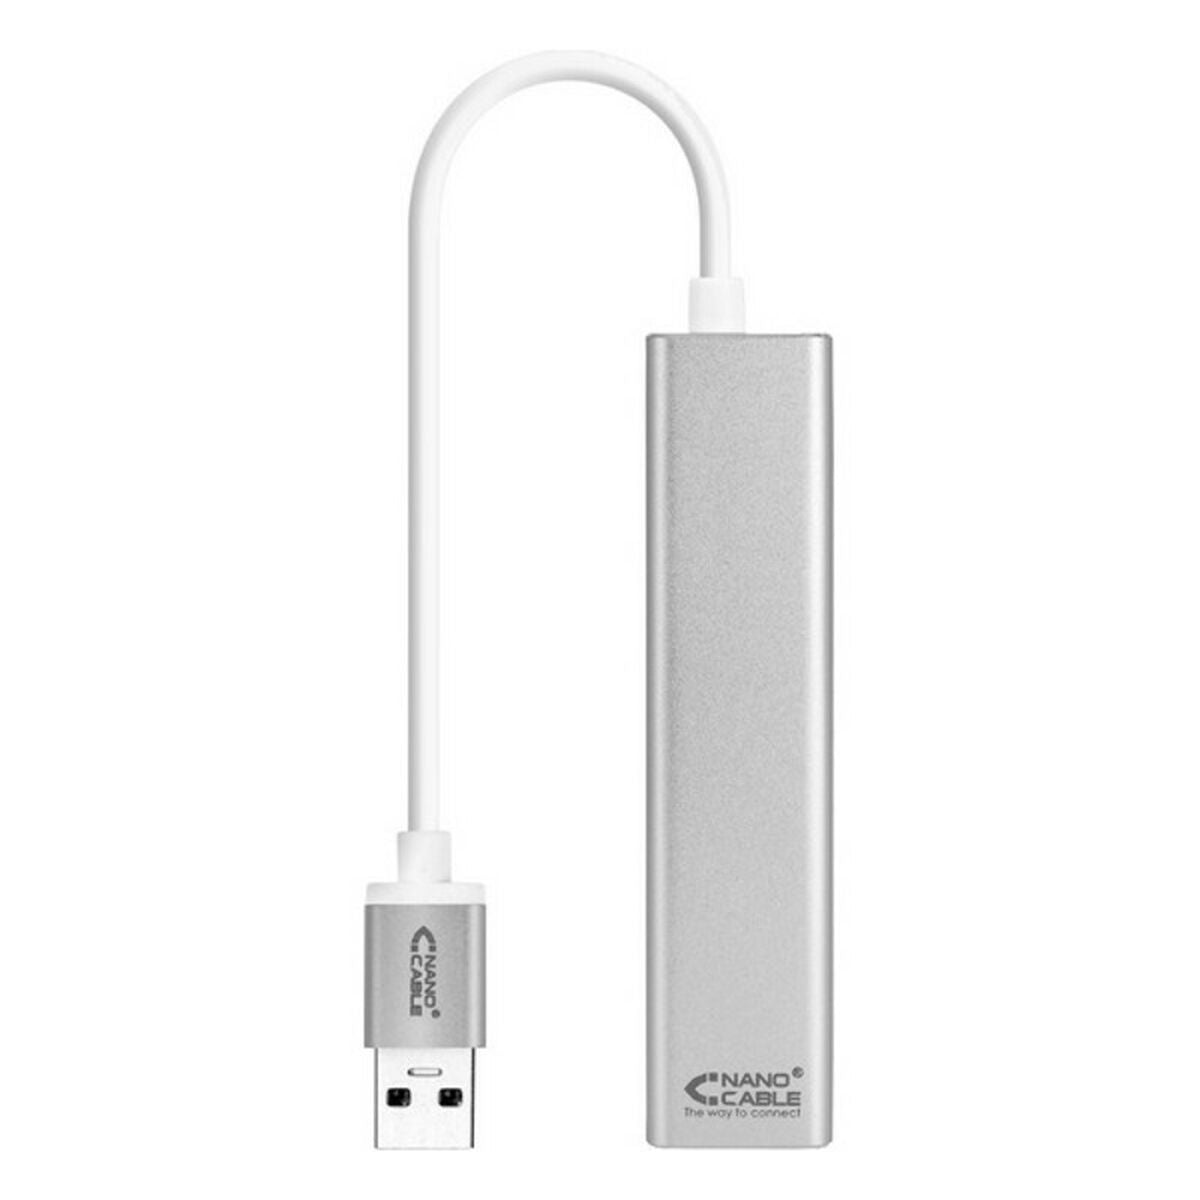 USB 3.0 to Gigabit Ethernet Converter NANOCABLE 10.03.0403-0